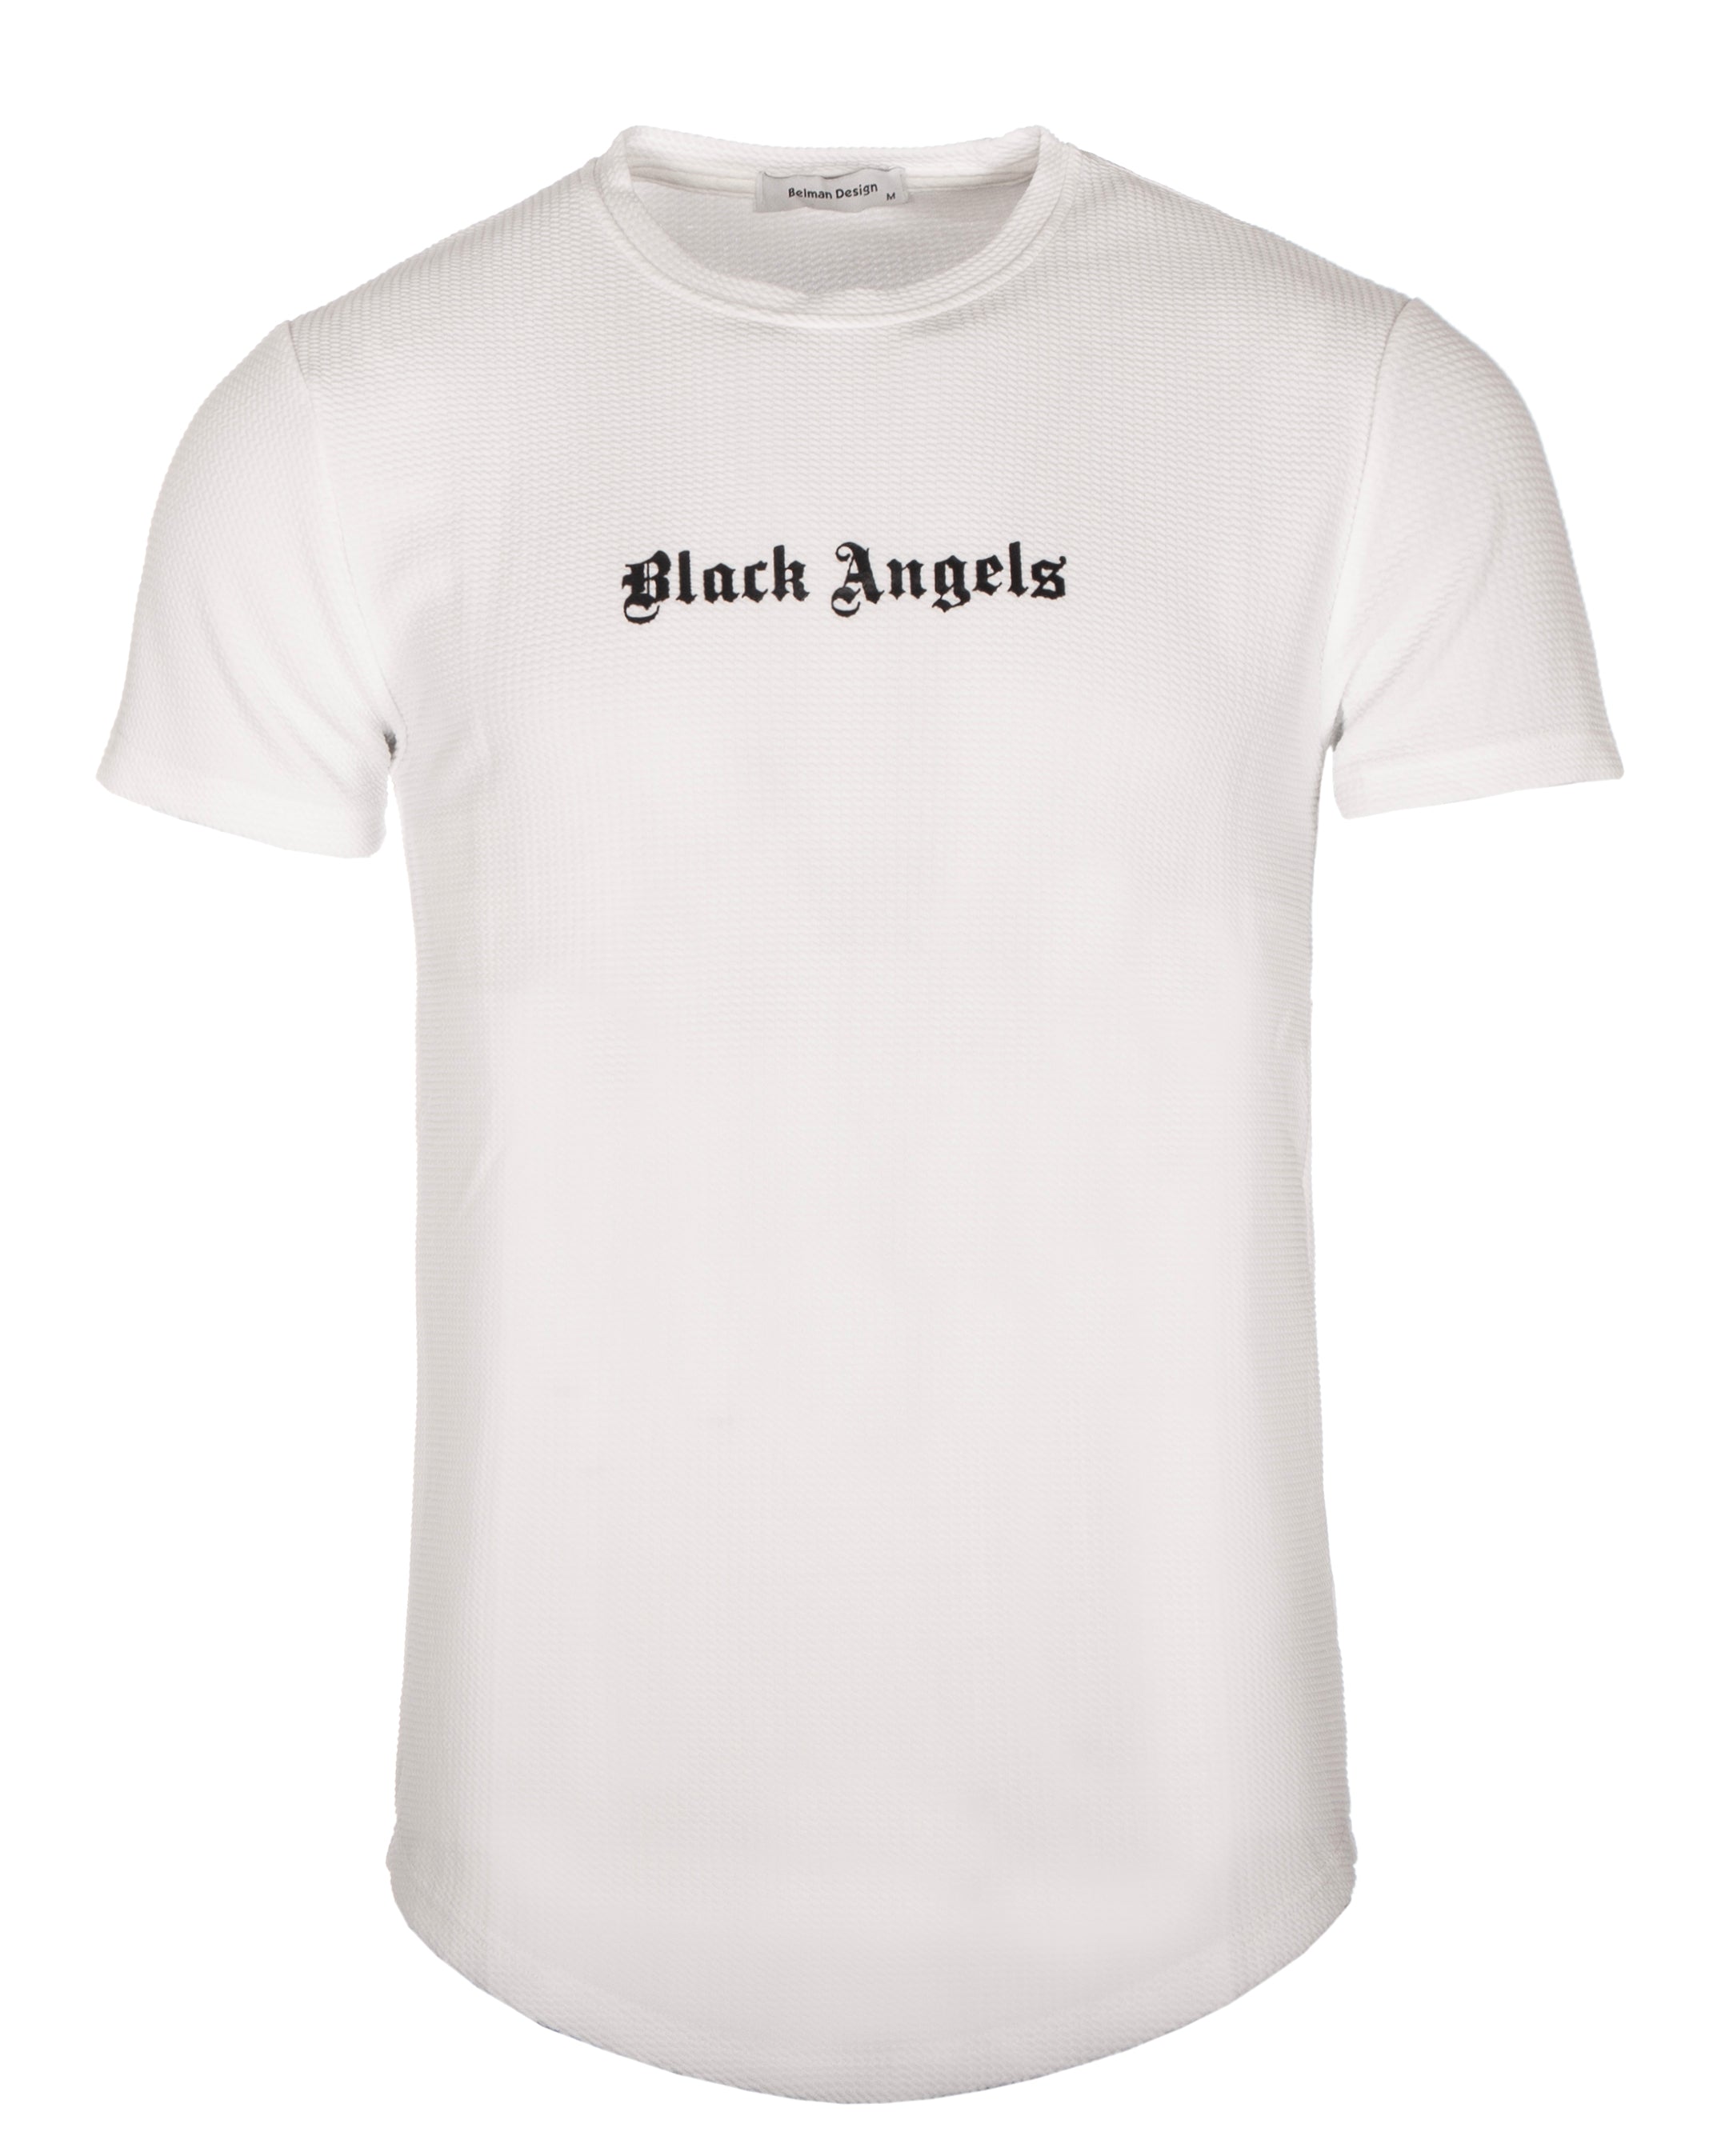 Black Angels t-shirt - White